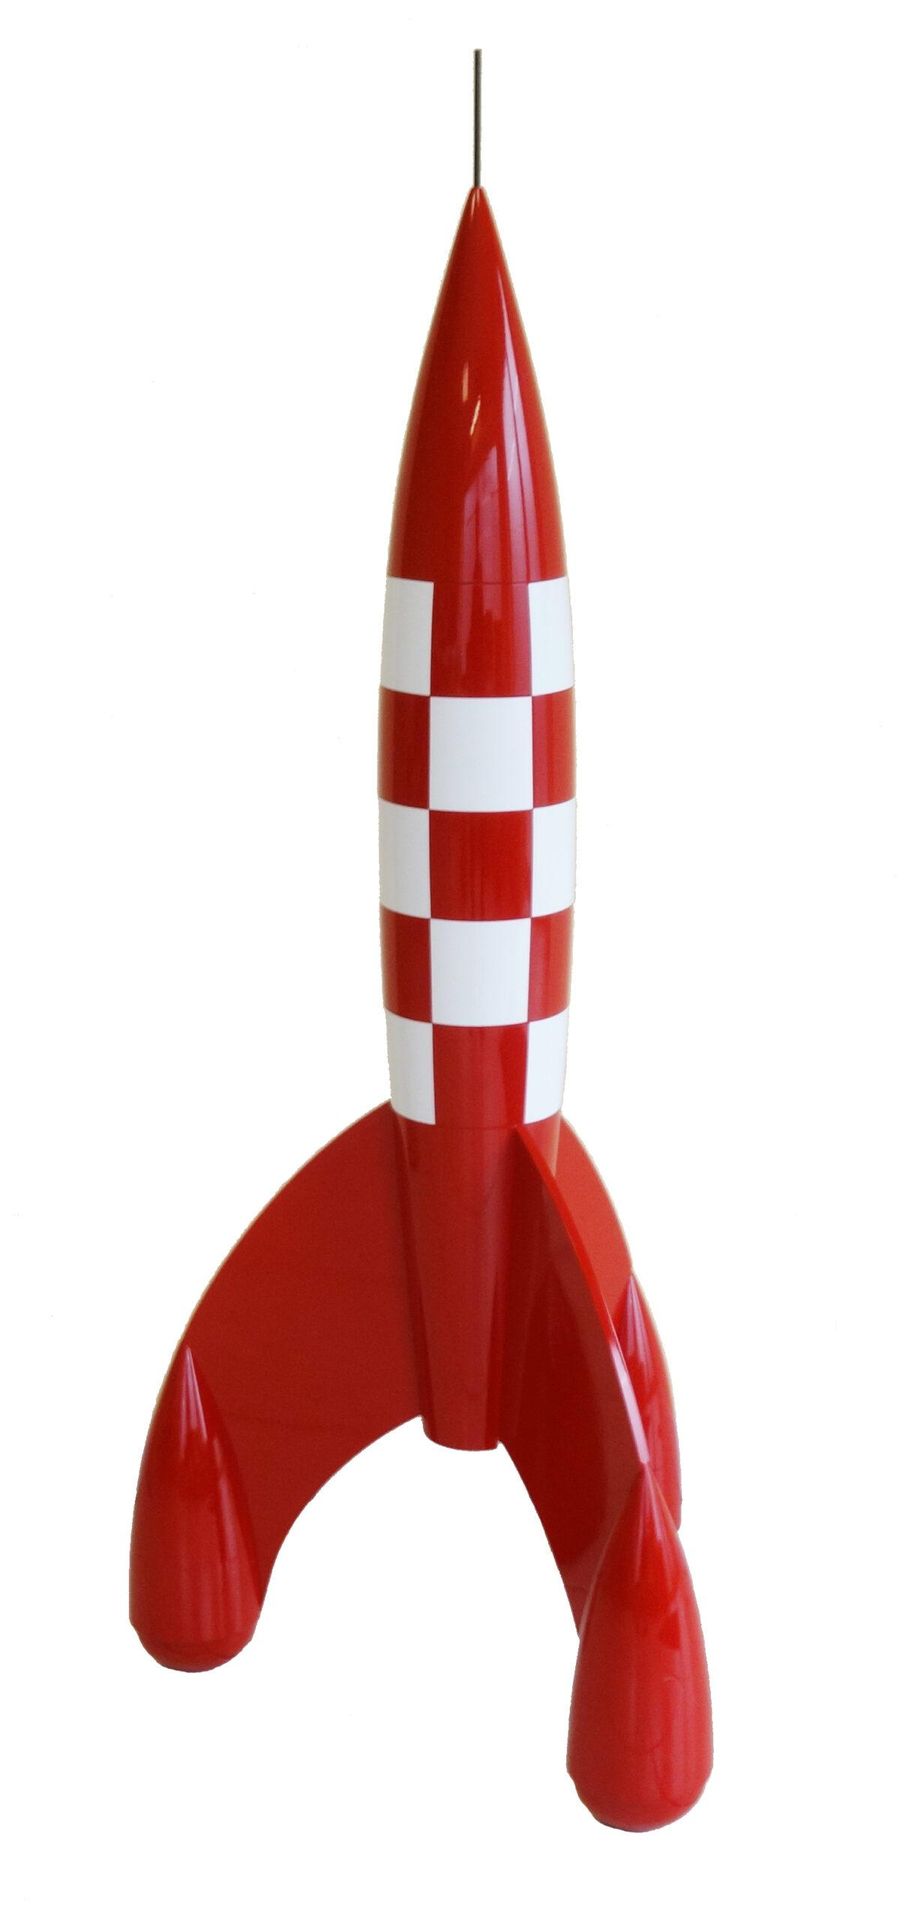 Hergé AROUTCHEFF：丁丁，火箭160厘米，月球目标，木质版，1990年，有Aroutcheff标签。